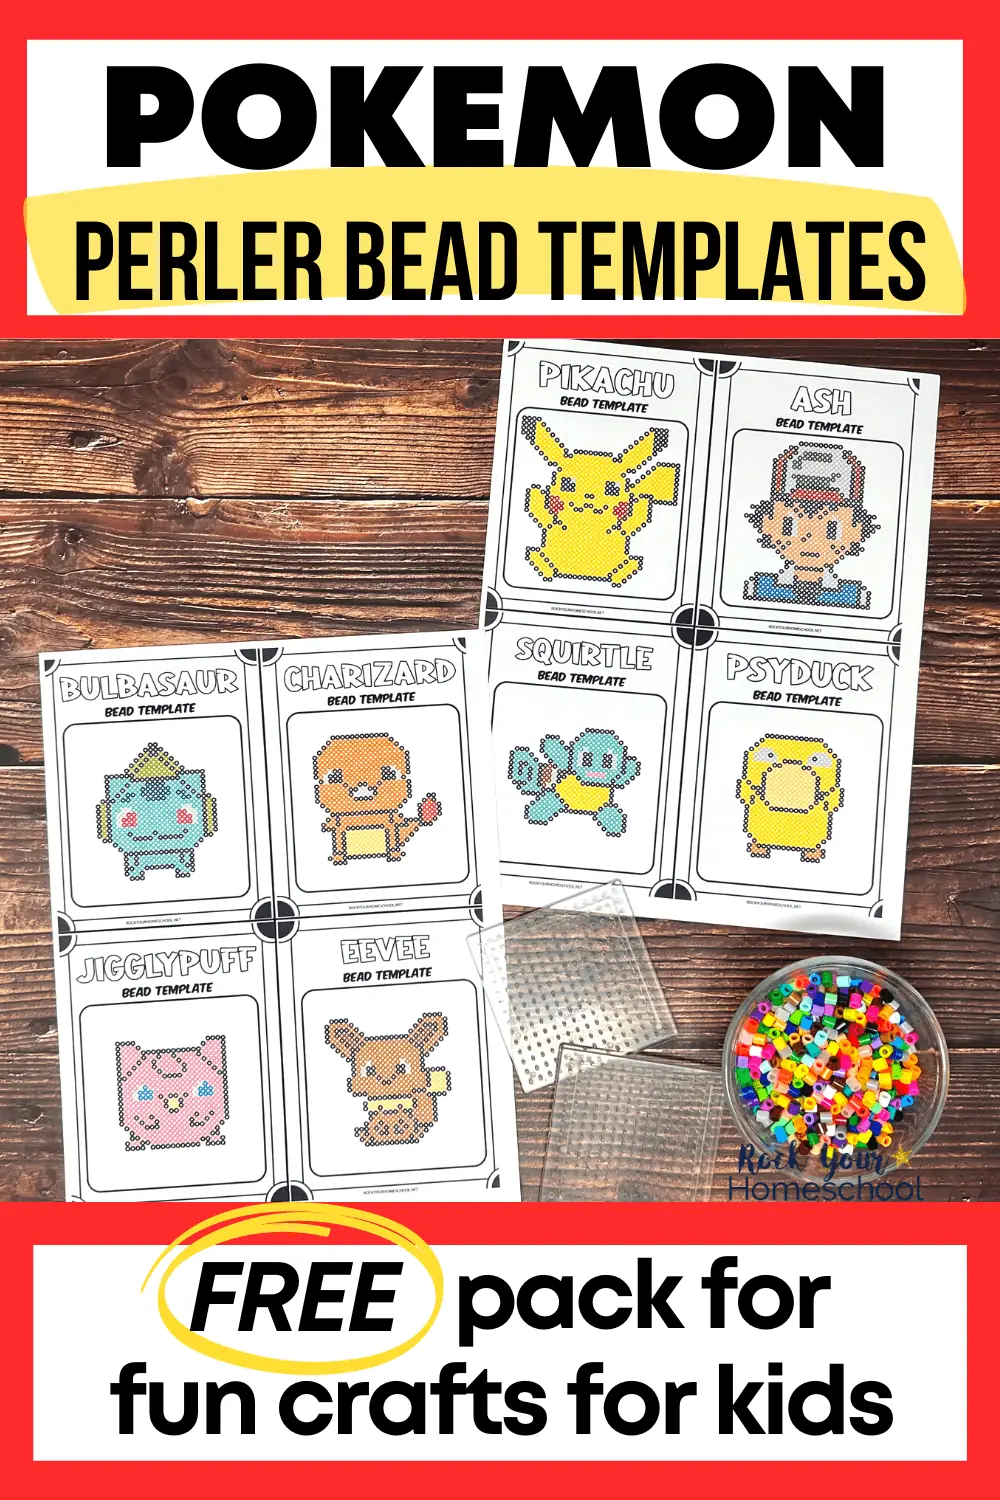 Pokemon Perler Bead Patterns: How to Make These Fun Crafts (8 Free)